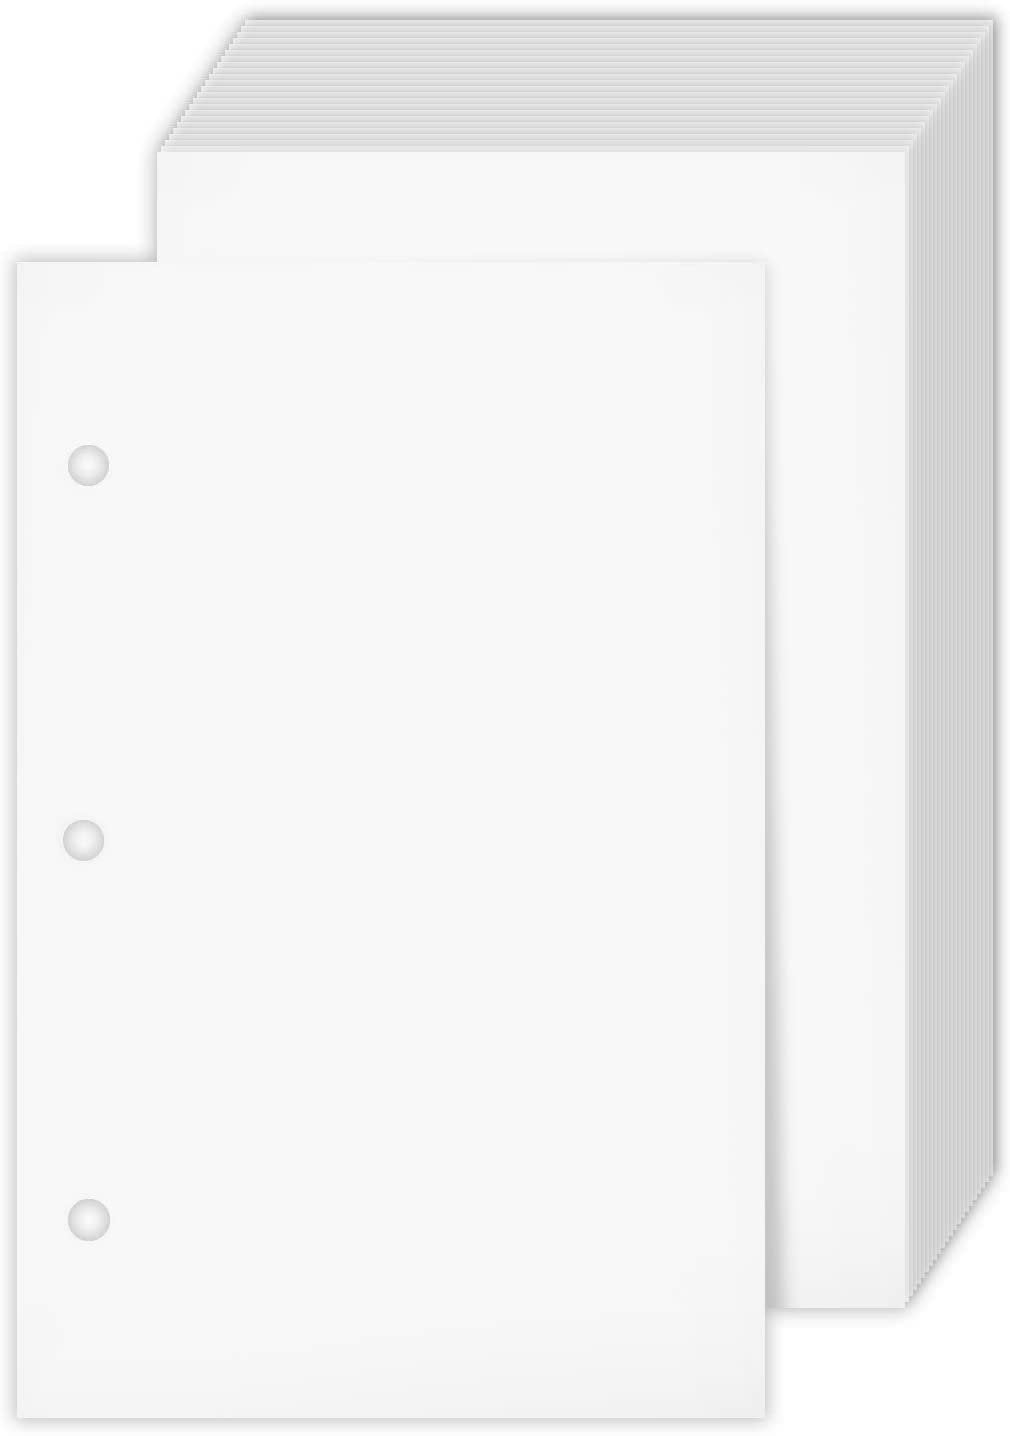 12 X 8.5 20lb Blank Clean Edge Continuous Computer Paper - 3700/Case (1  Ply)